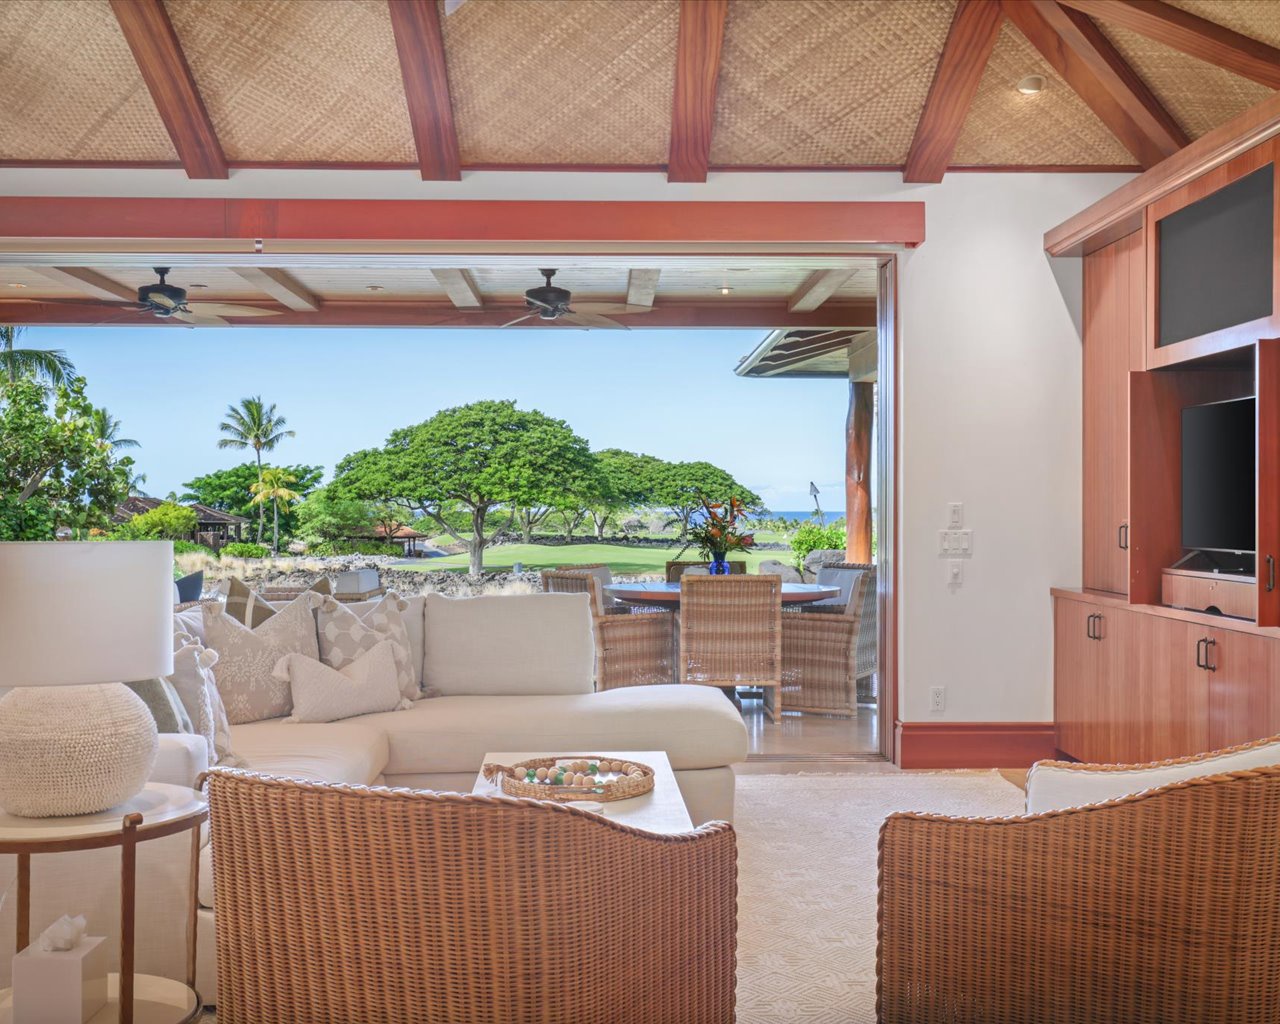 Kailua Kona Vacation Rentals, 3BD Pakui Street (131) Estate Home at Four Seasons Resort at Hualalai - Plush seating & beautiful views welcome you